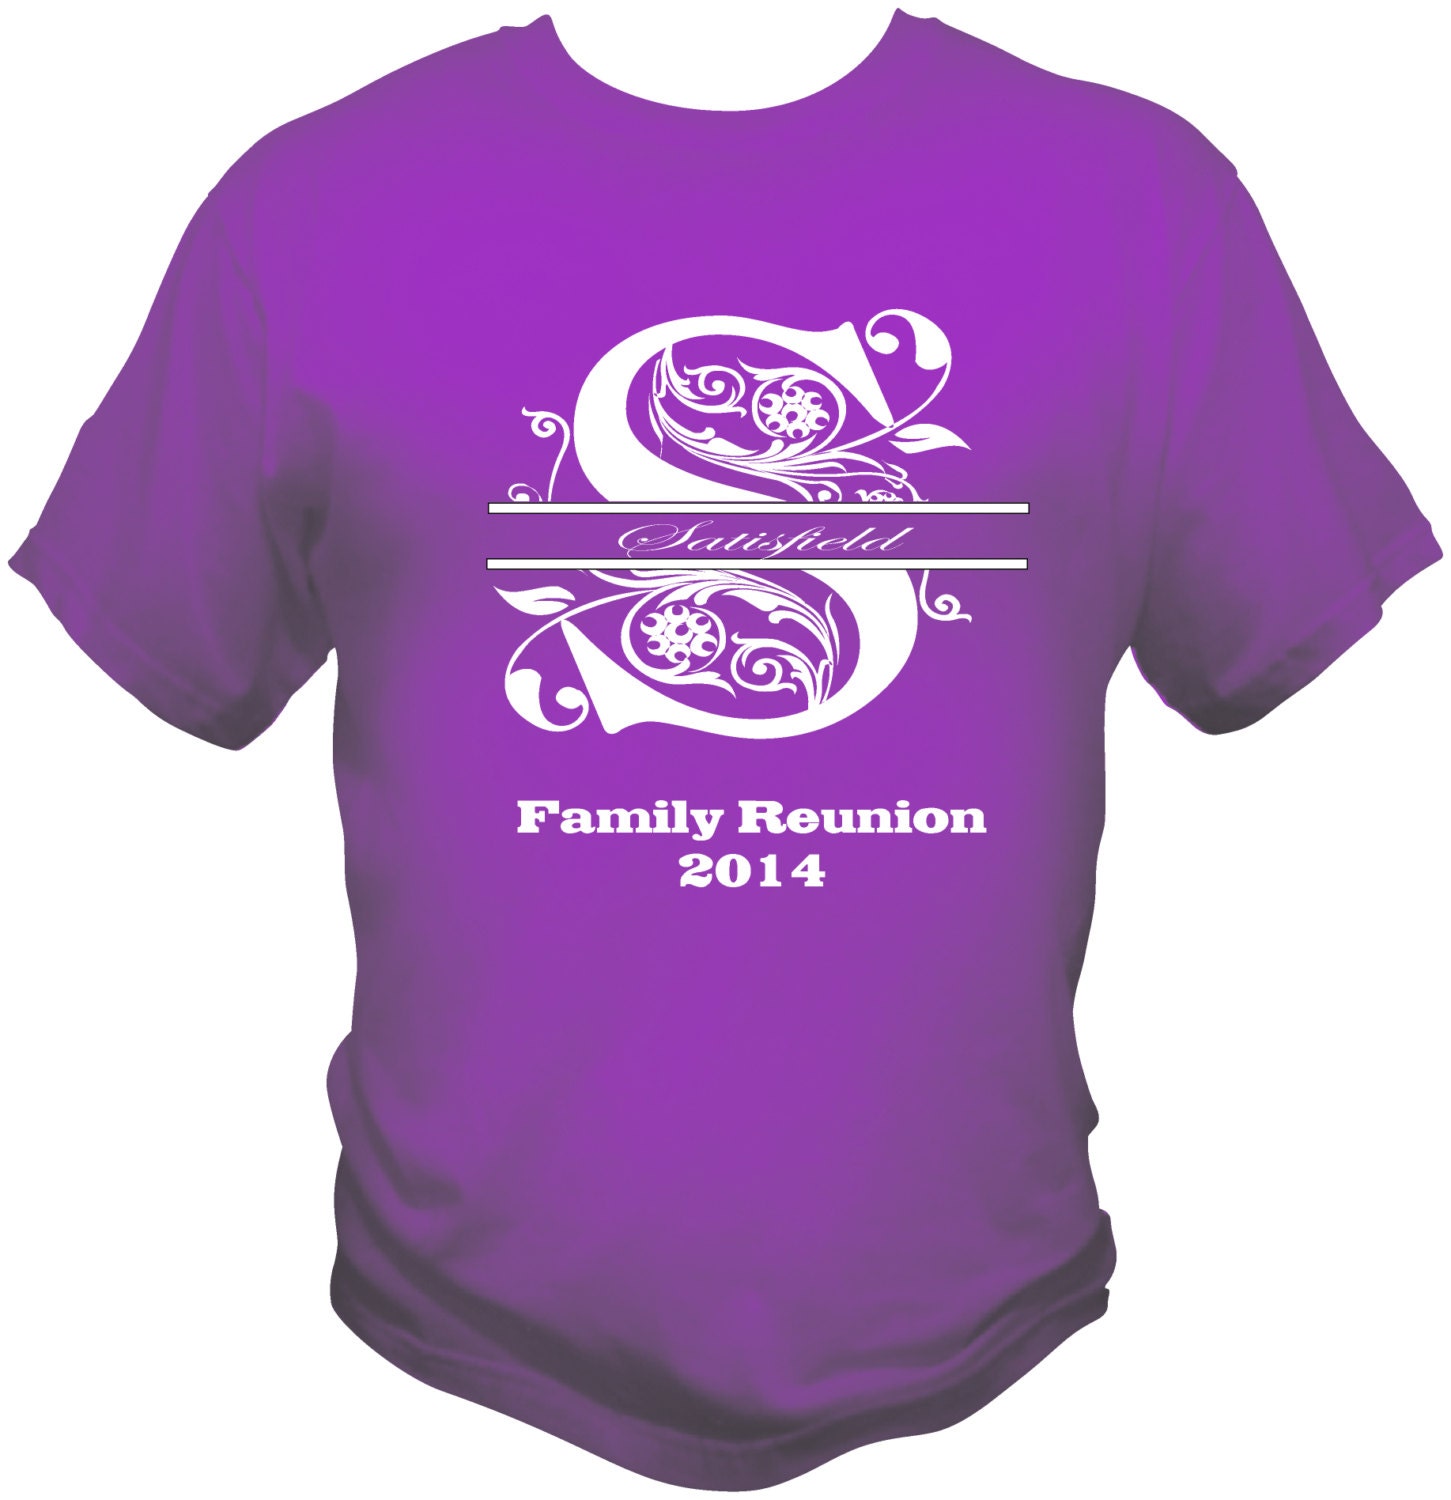 Split Monogram Family Reunion Shirts by Wisemansays on Etsy